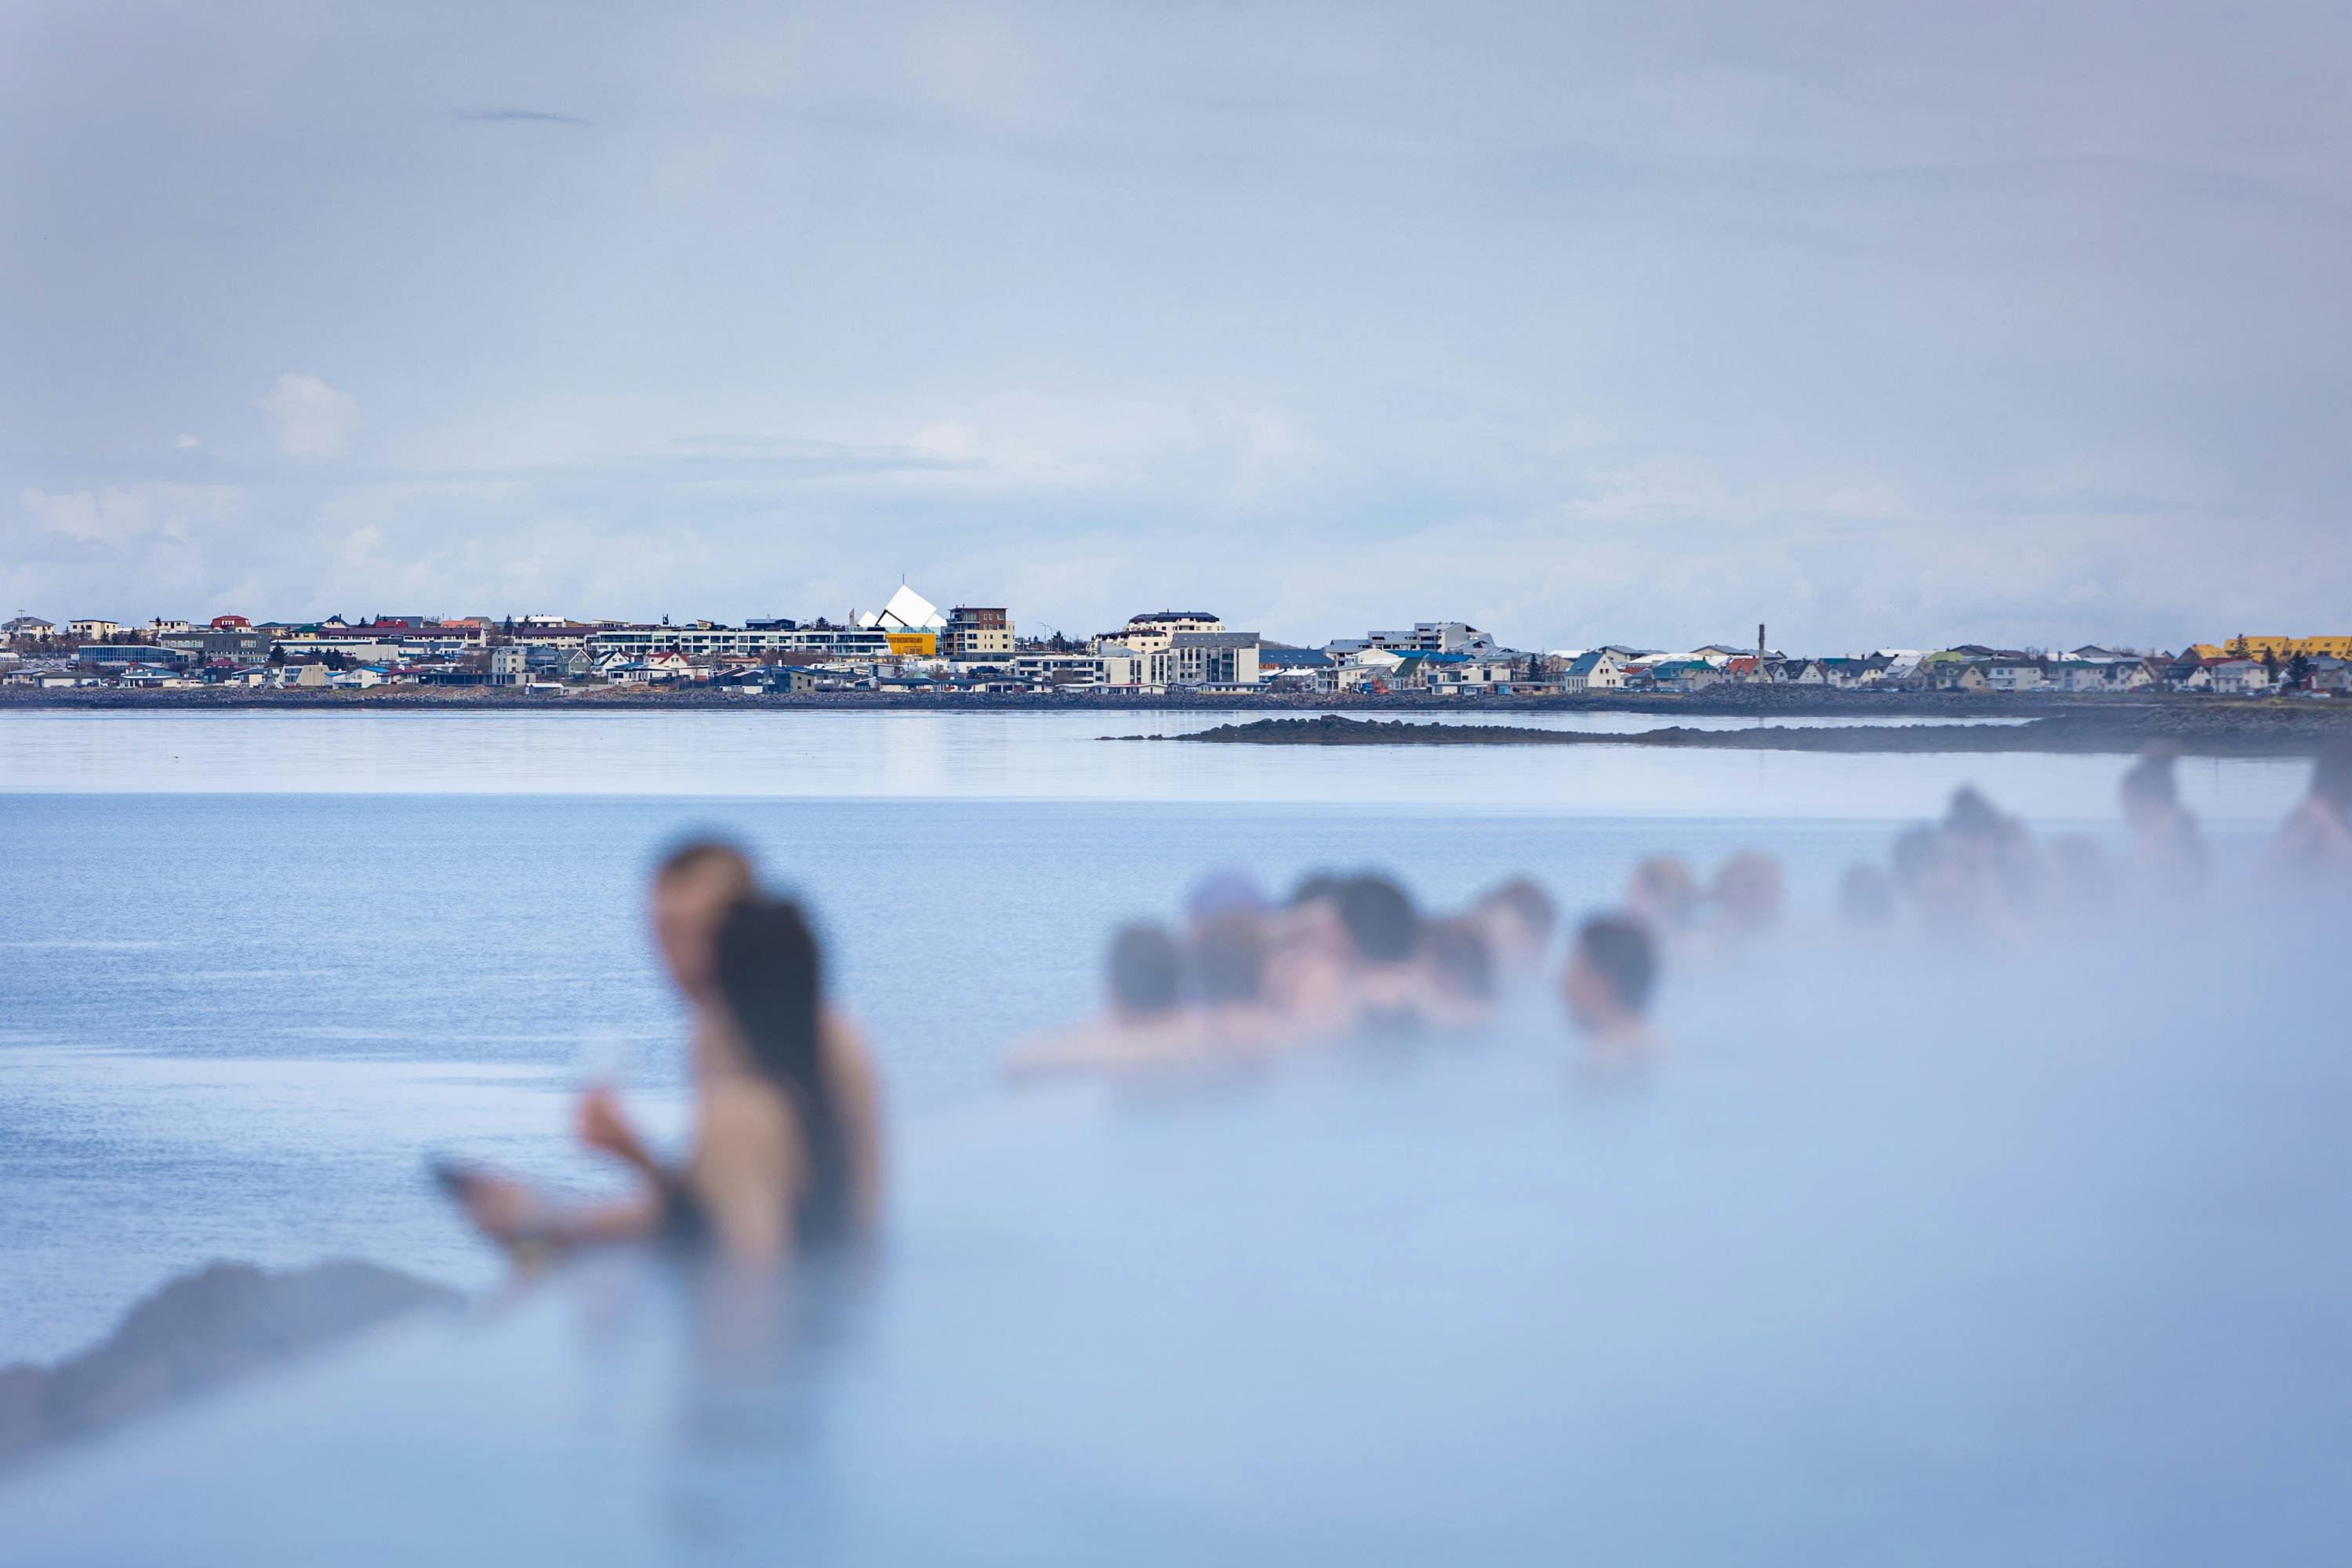 Sky Lagoon opened in 2021 and is in Kópavogur in the Reykjavík capital area